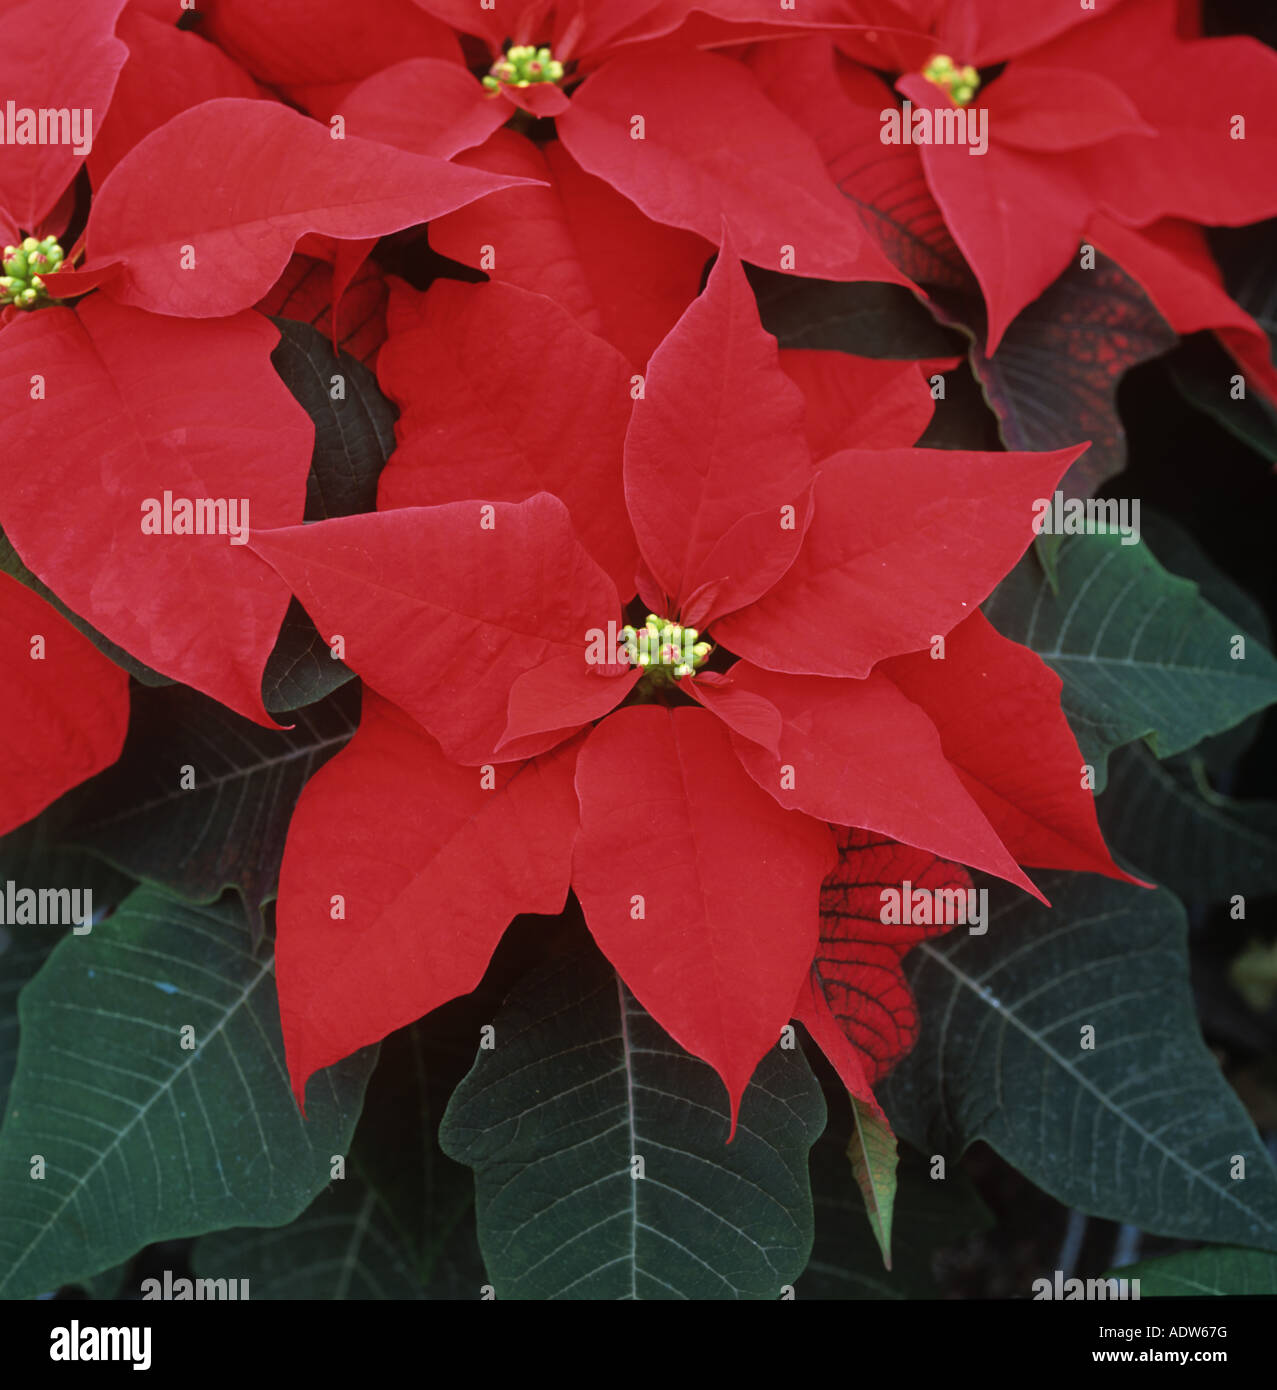 Poinsettia Spotlight planta roja con brácteas de color rojo listo para envío de Navidad Foto de stock